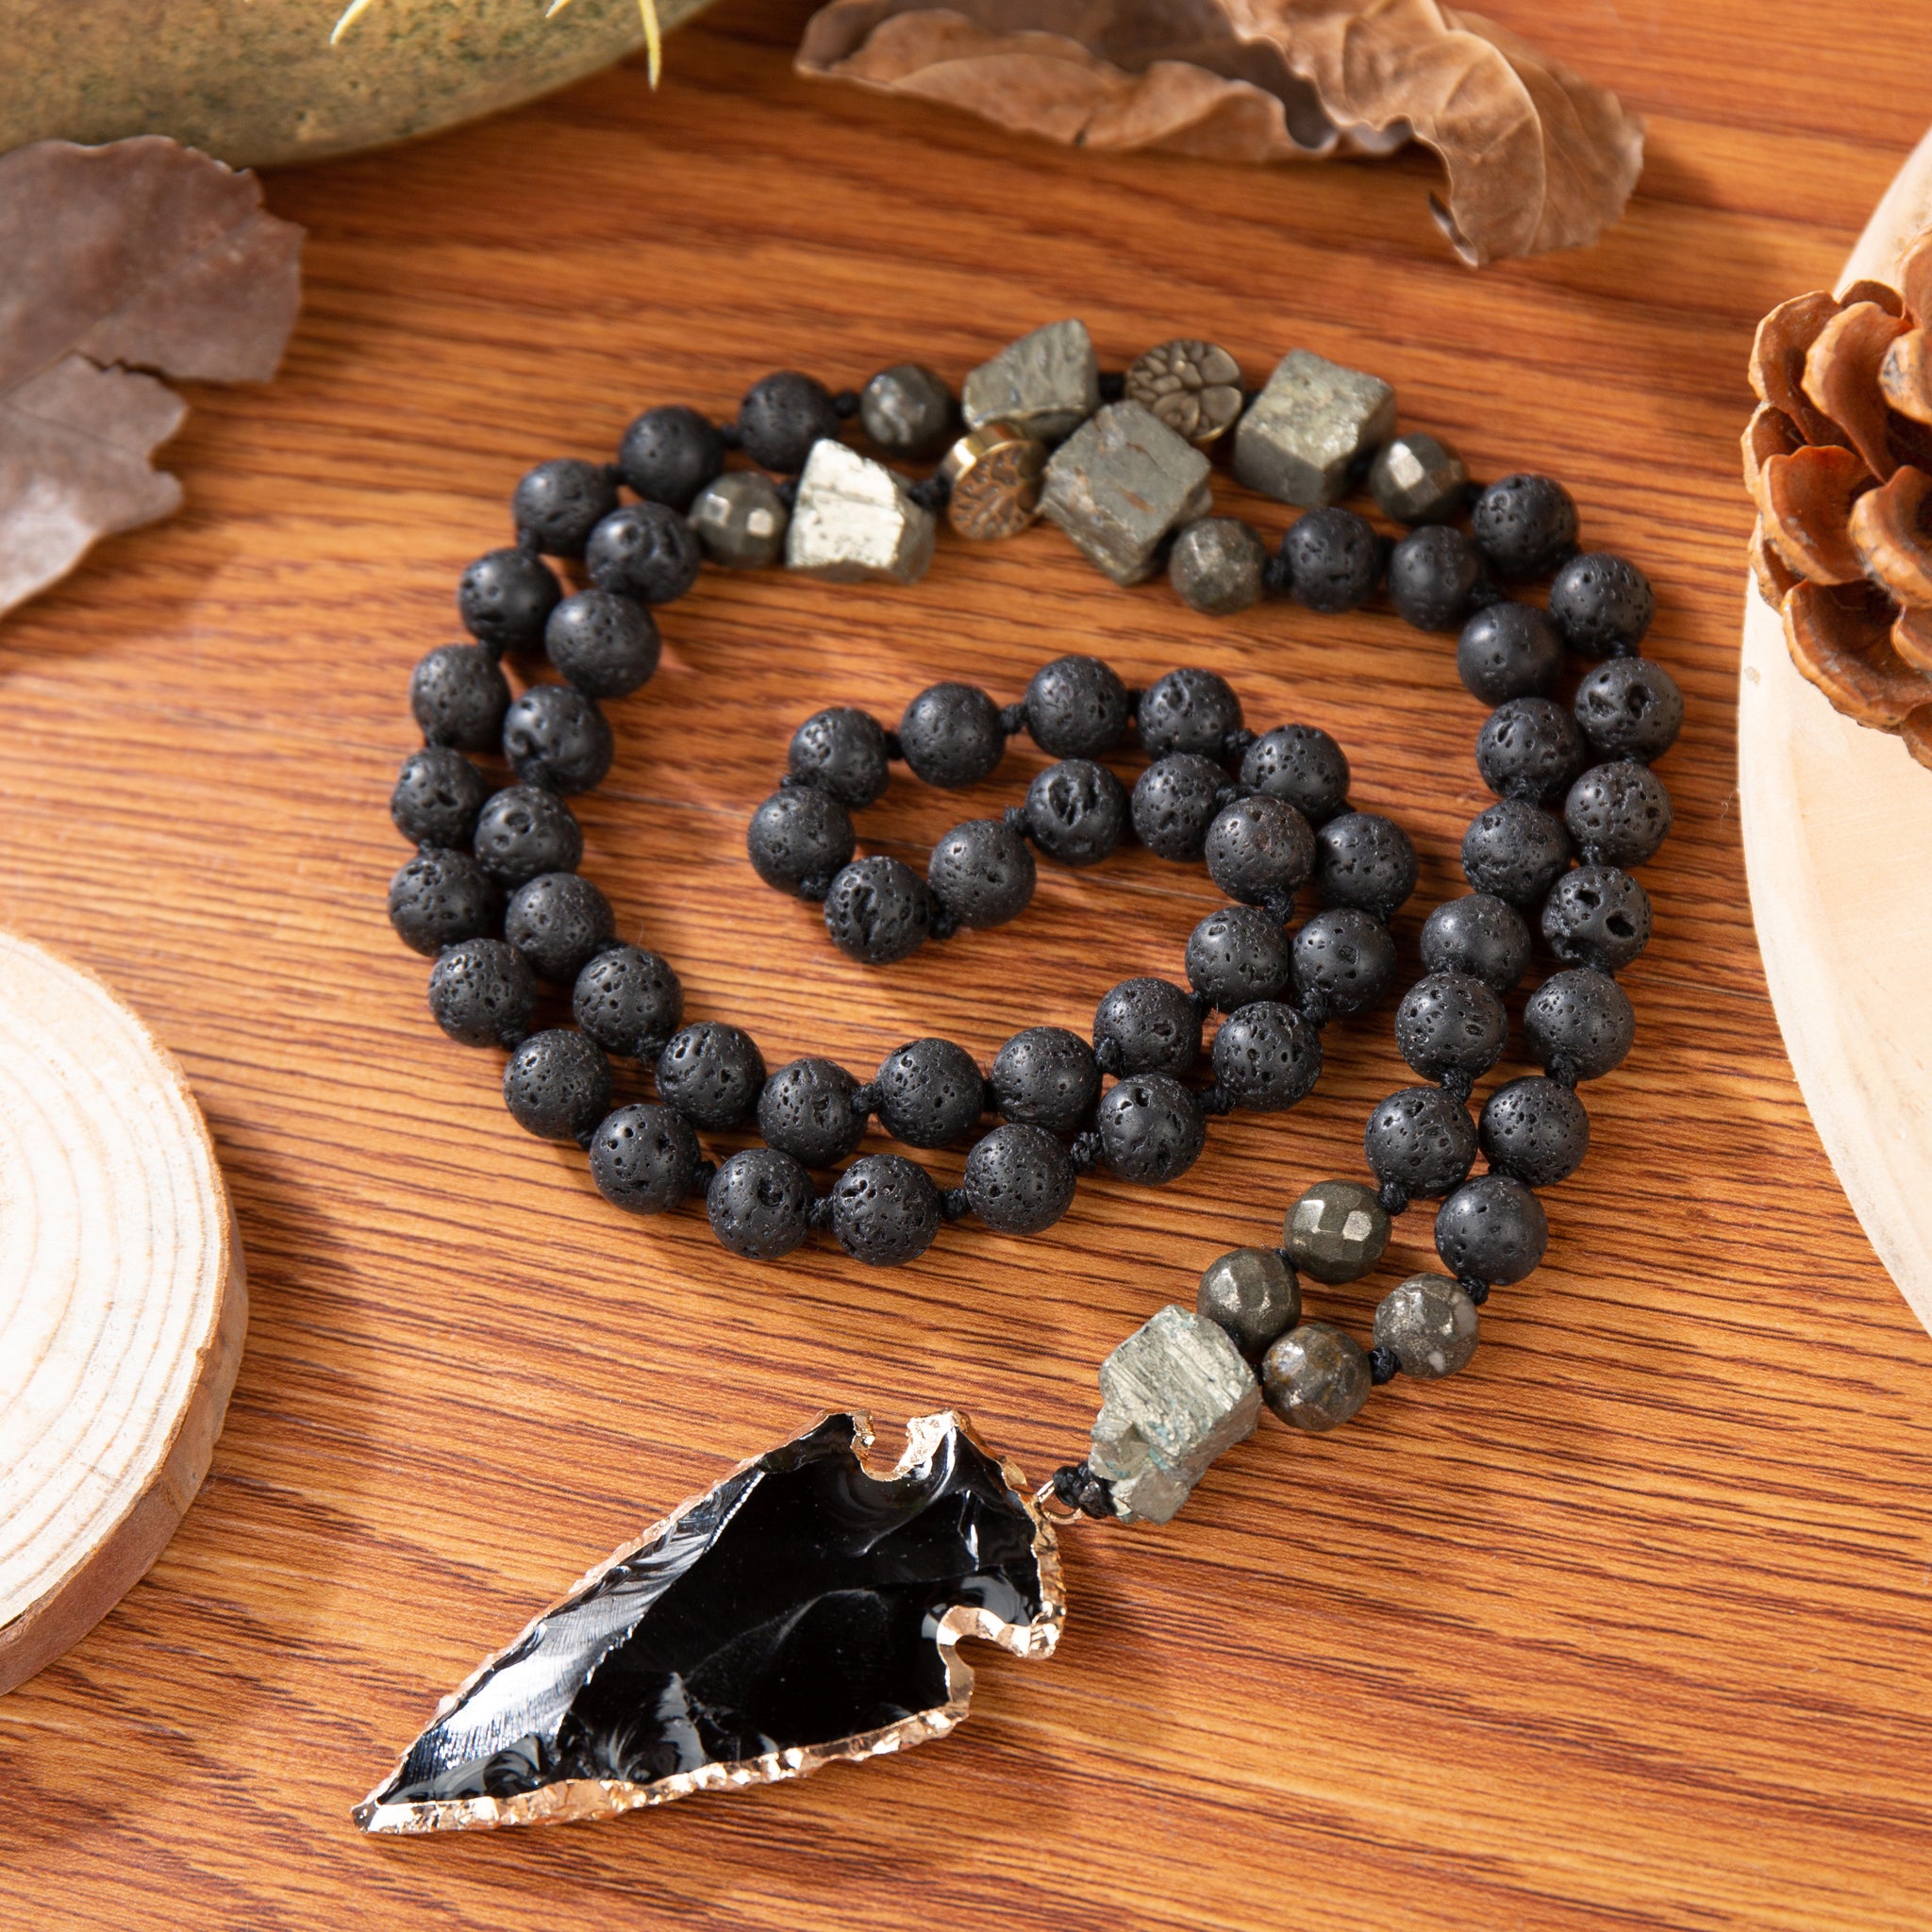 Black Obsidian Volcano Lava Stone Pendant Necklace